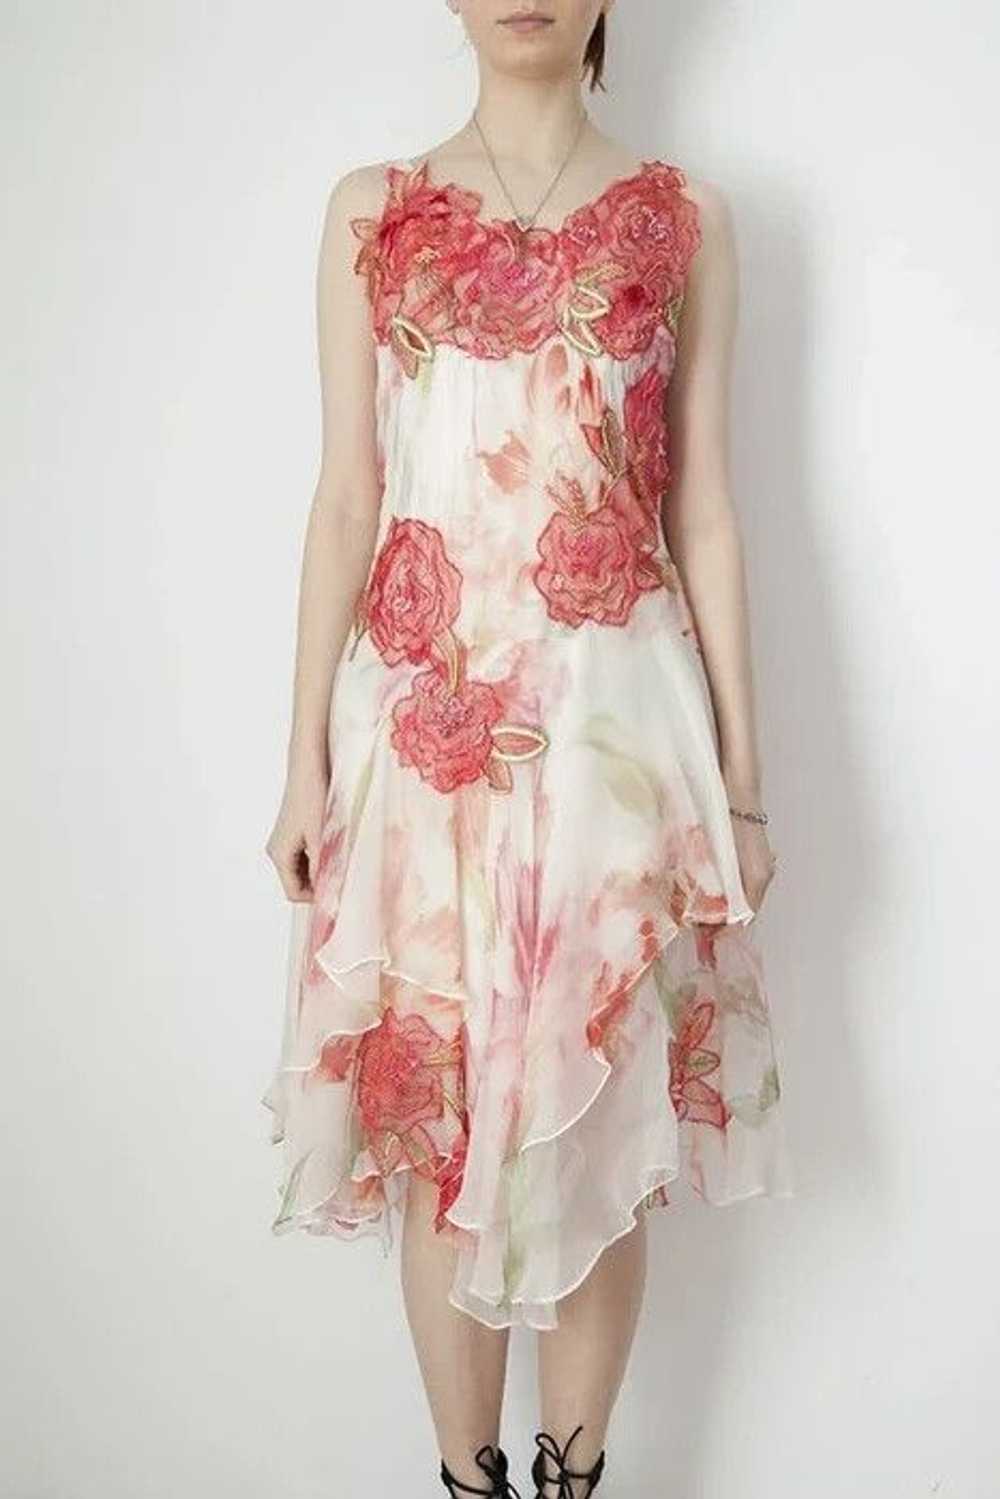 Barney Cools Couture à porter flower dress - image 1